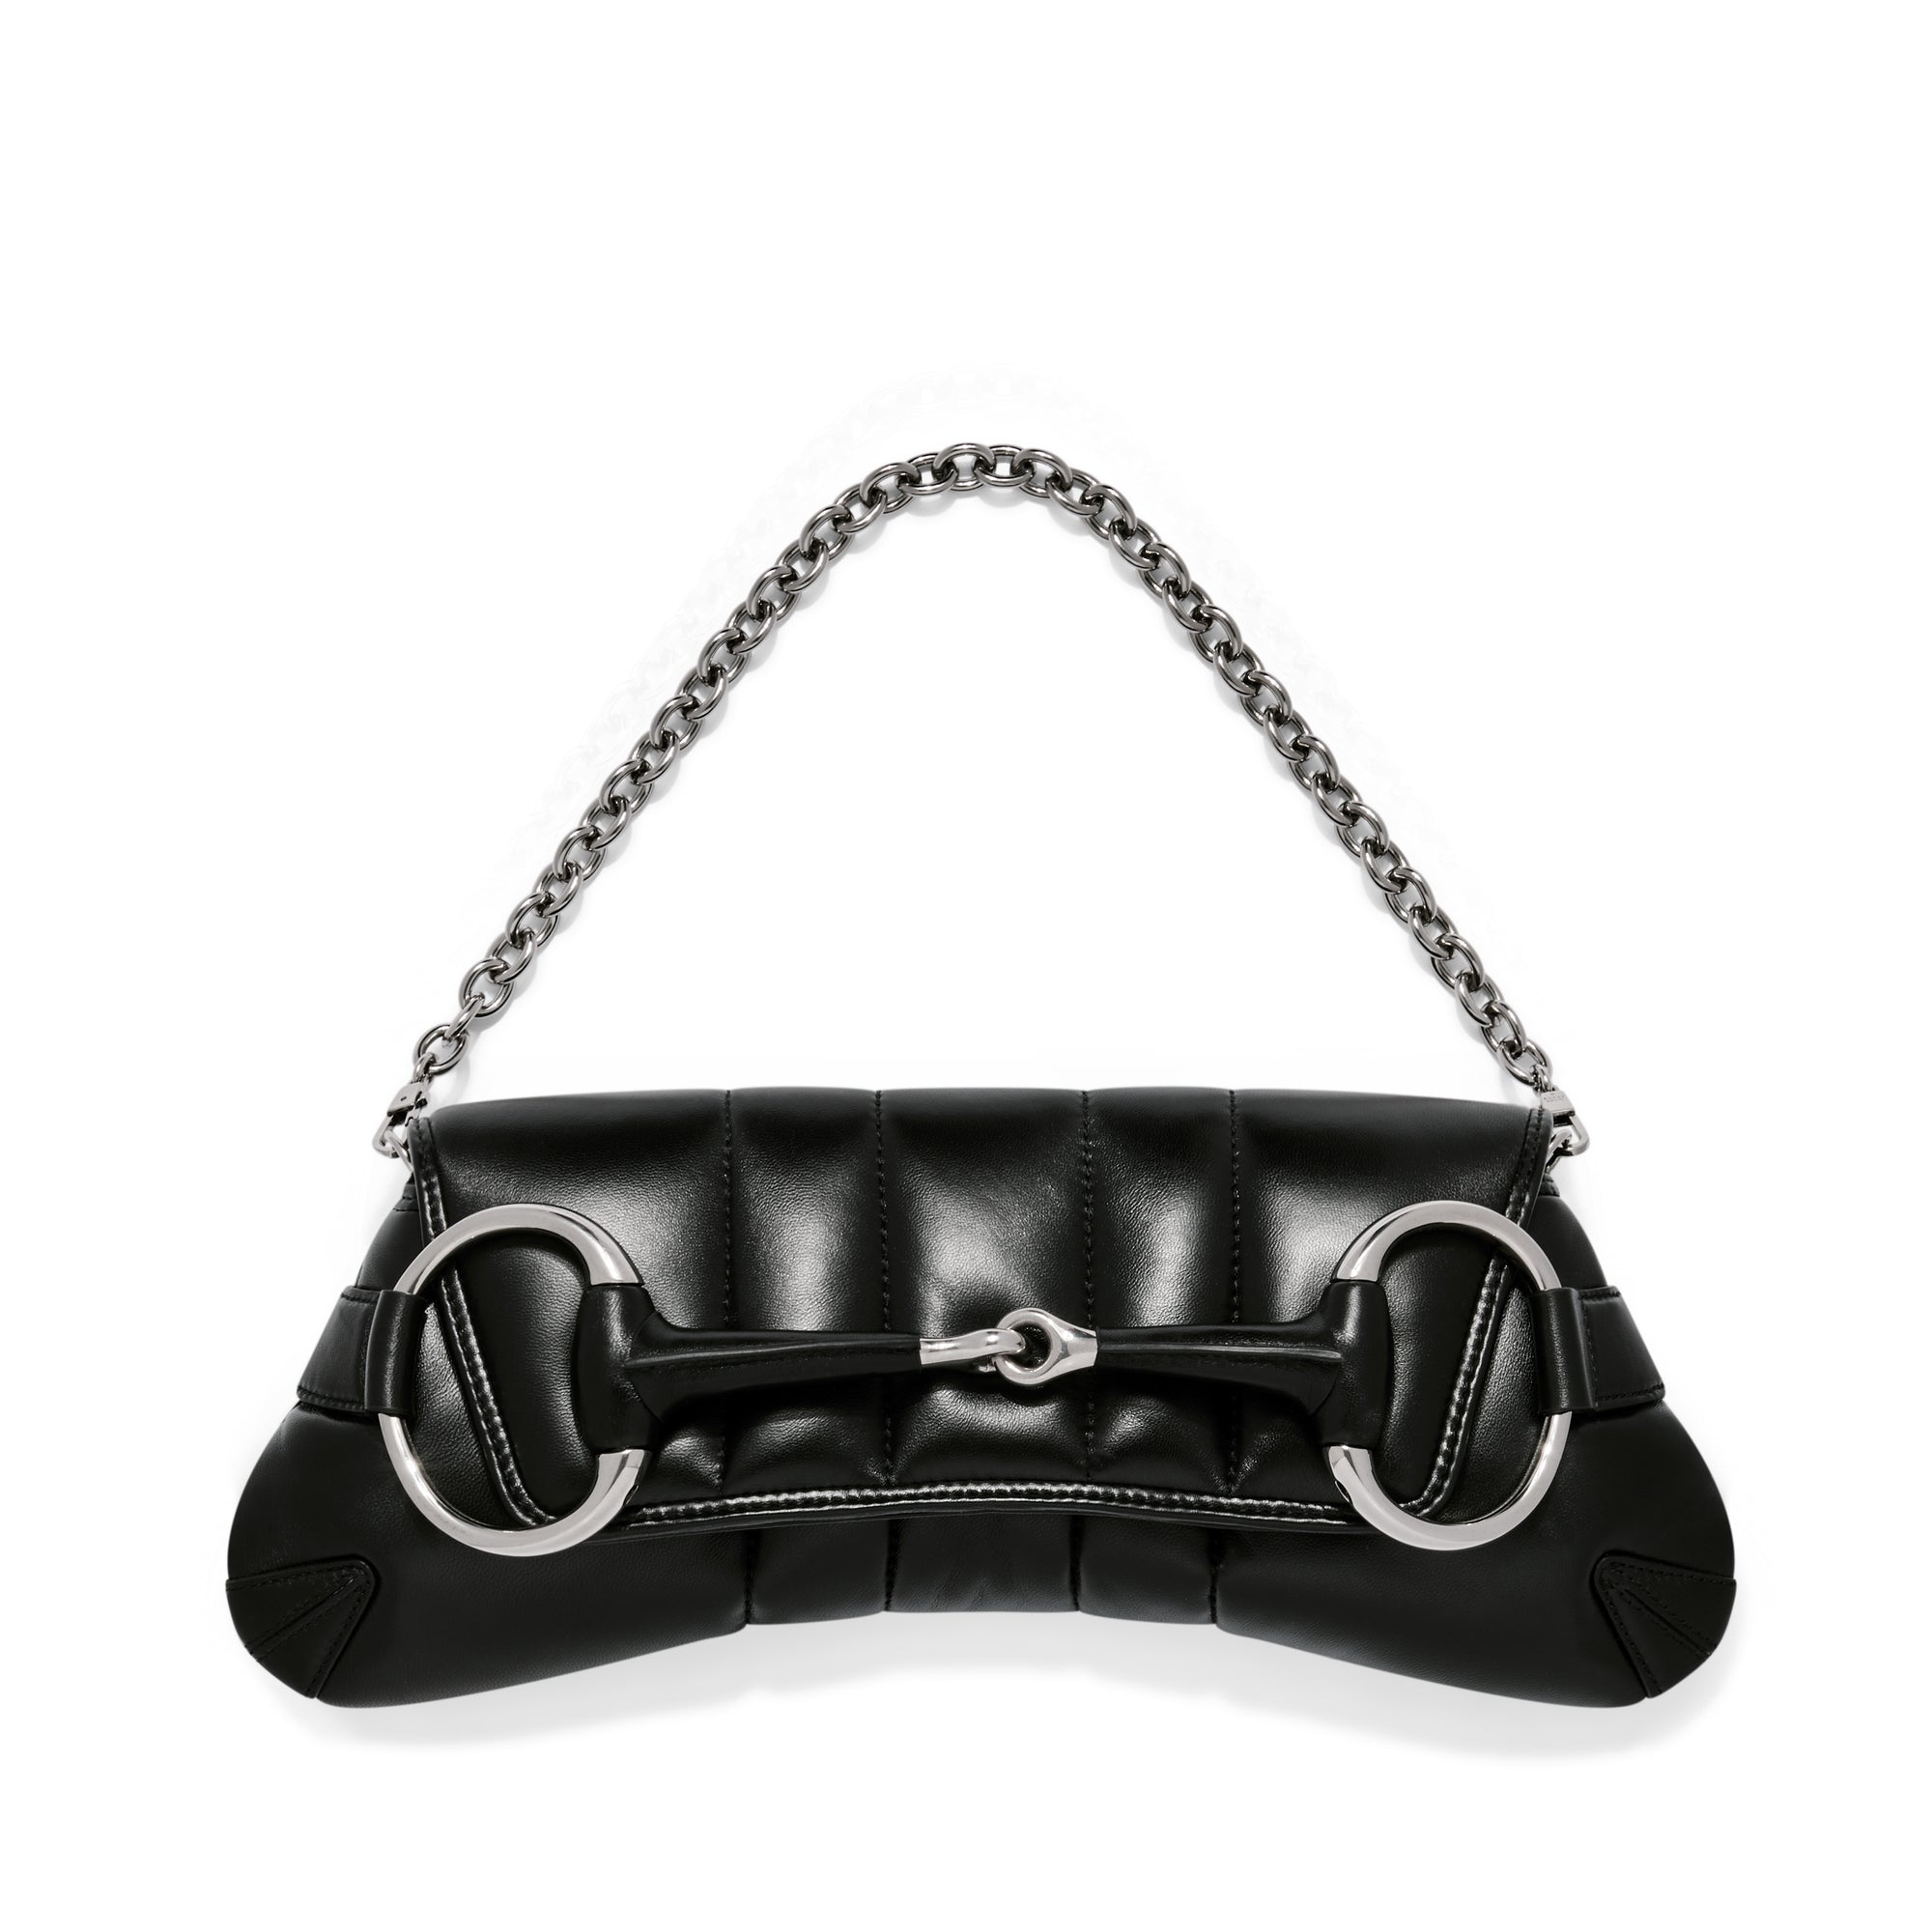 Gucci Horsebit Chain medium shoulder bag in black leather